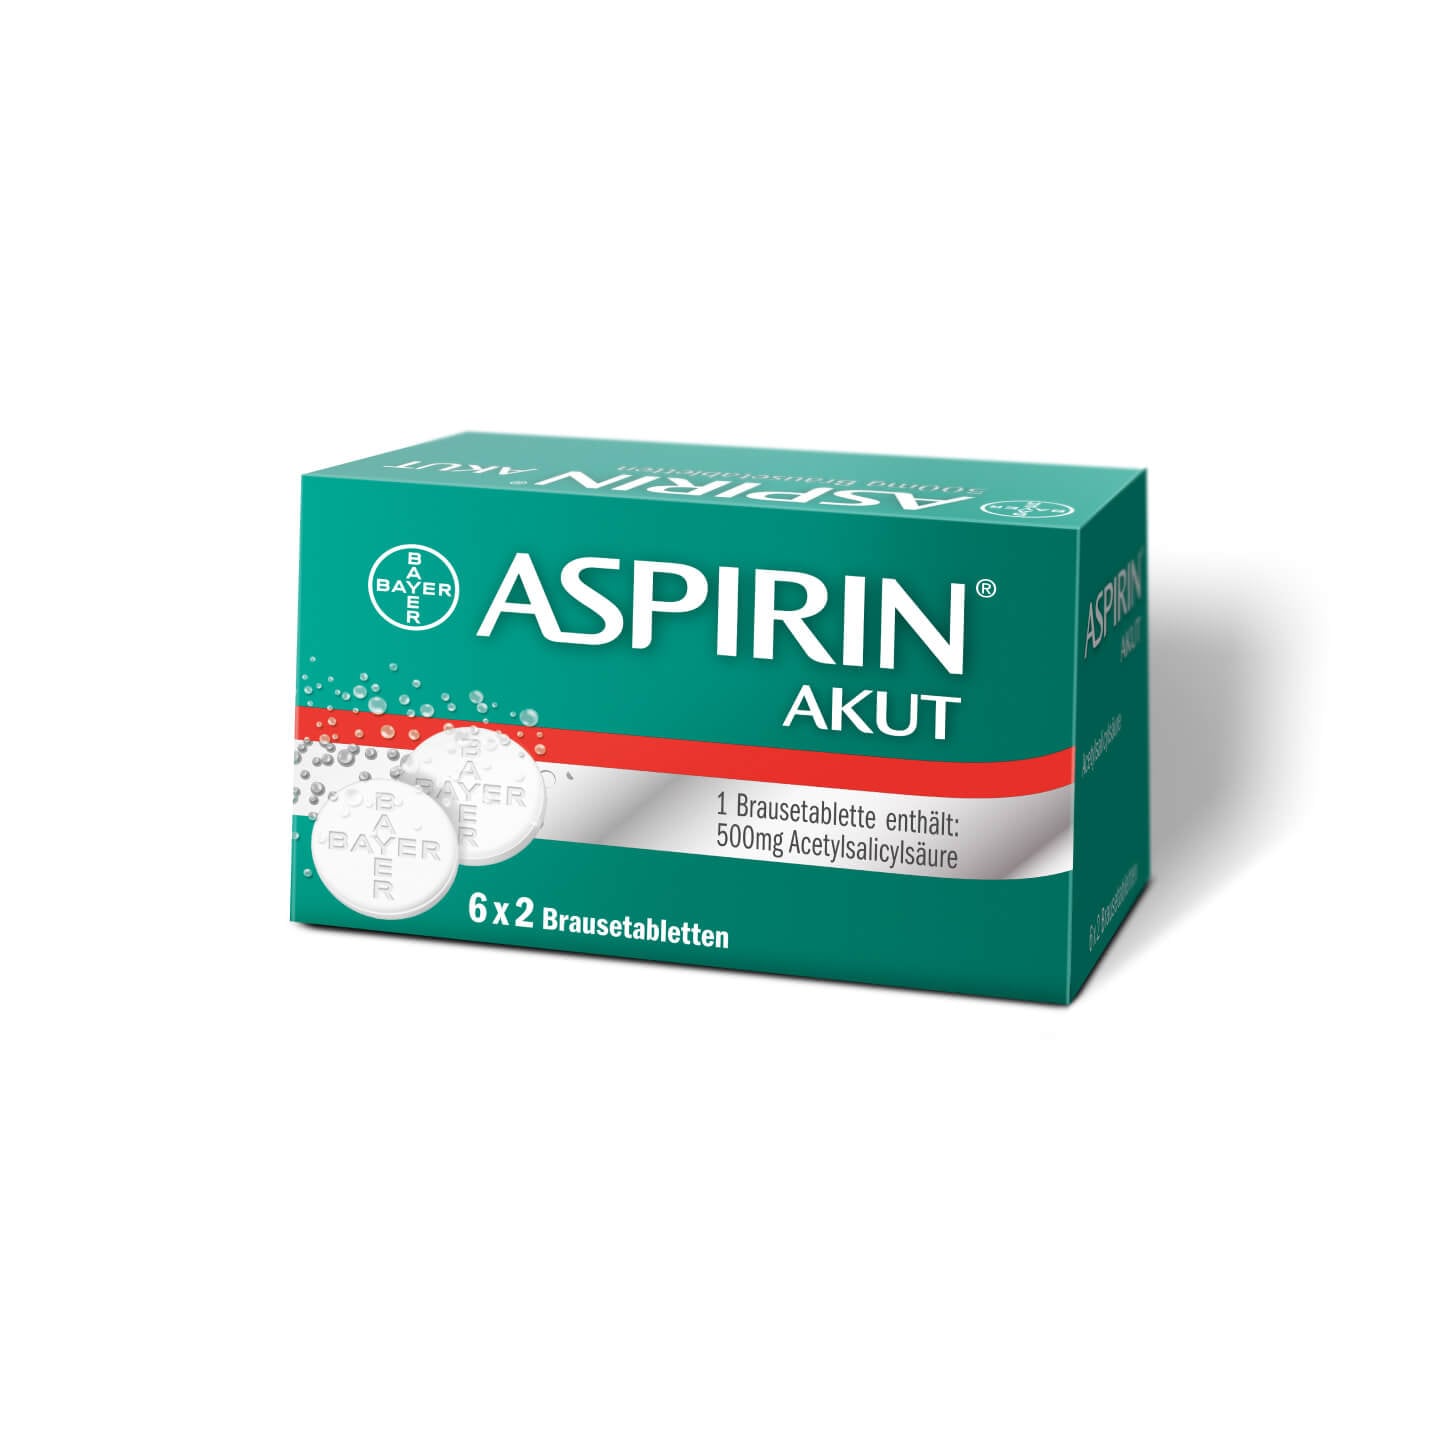 Aspirin® Akut 6x2